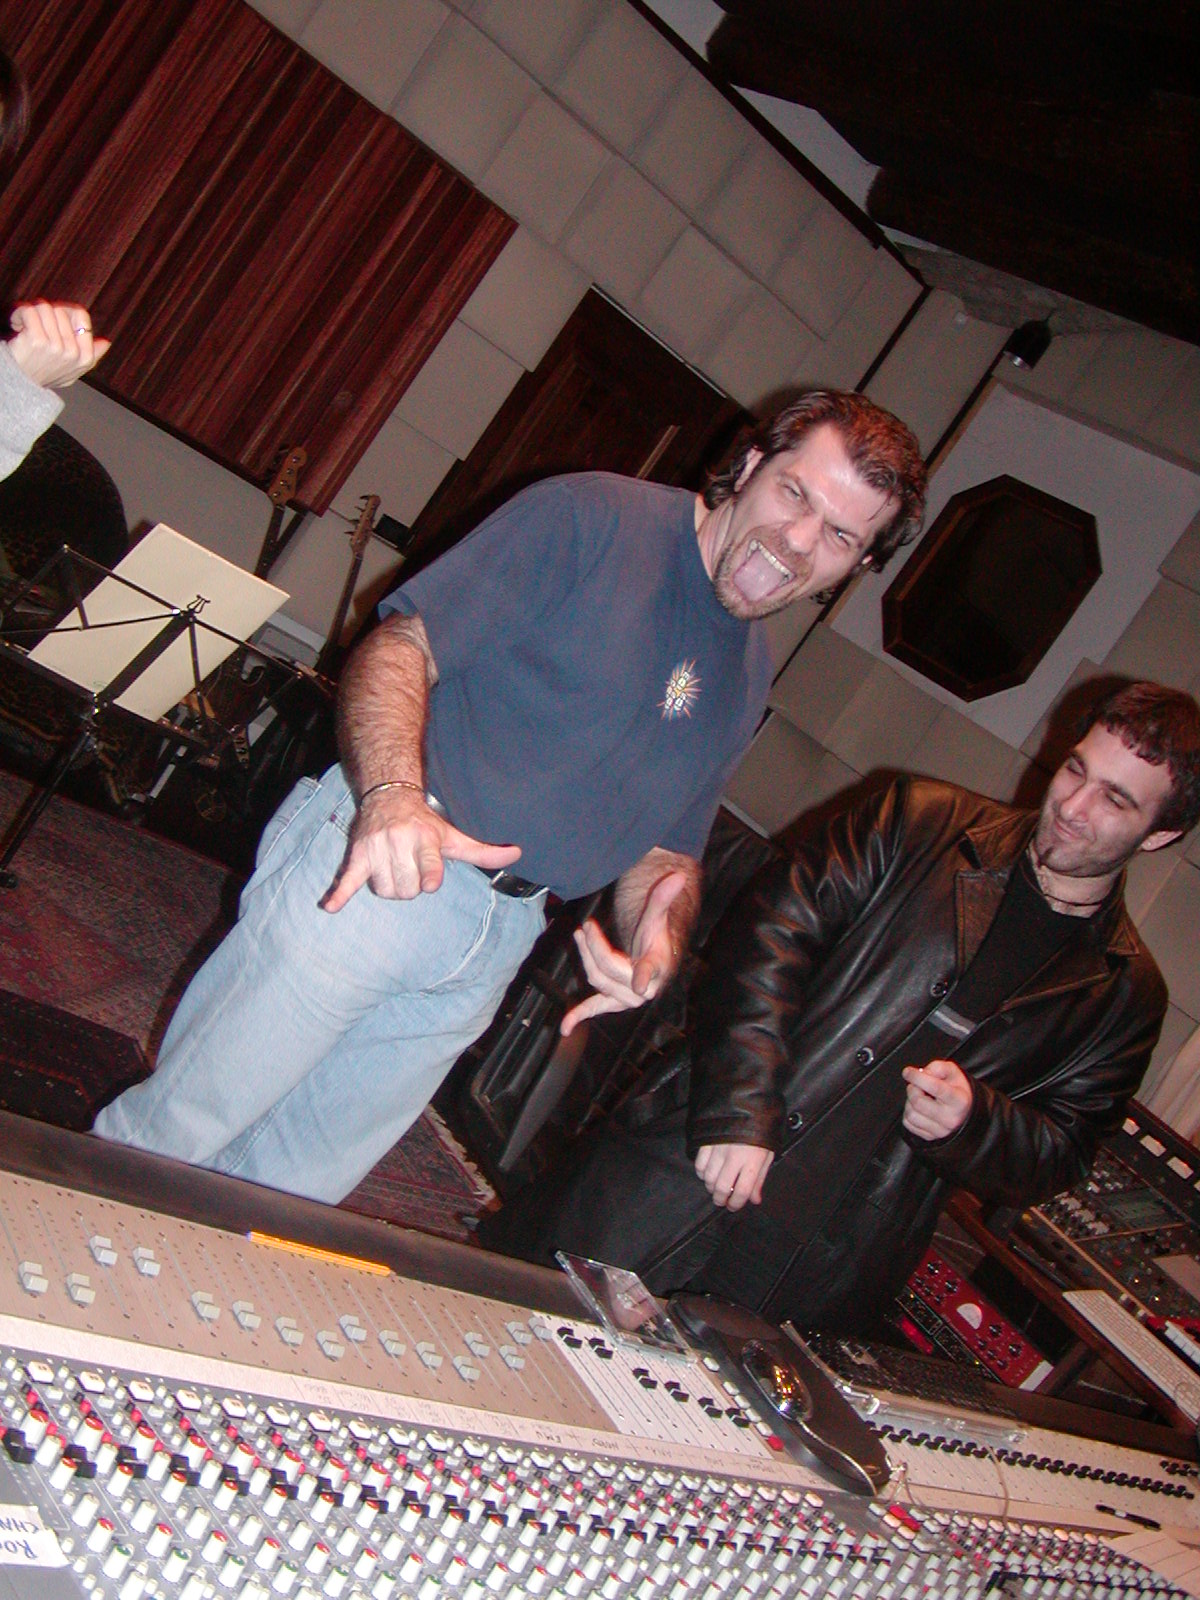 at Umbi Studios (RO)
Recording Alexia Album "Il cuore a modo mio" 2003